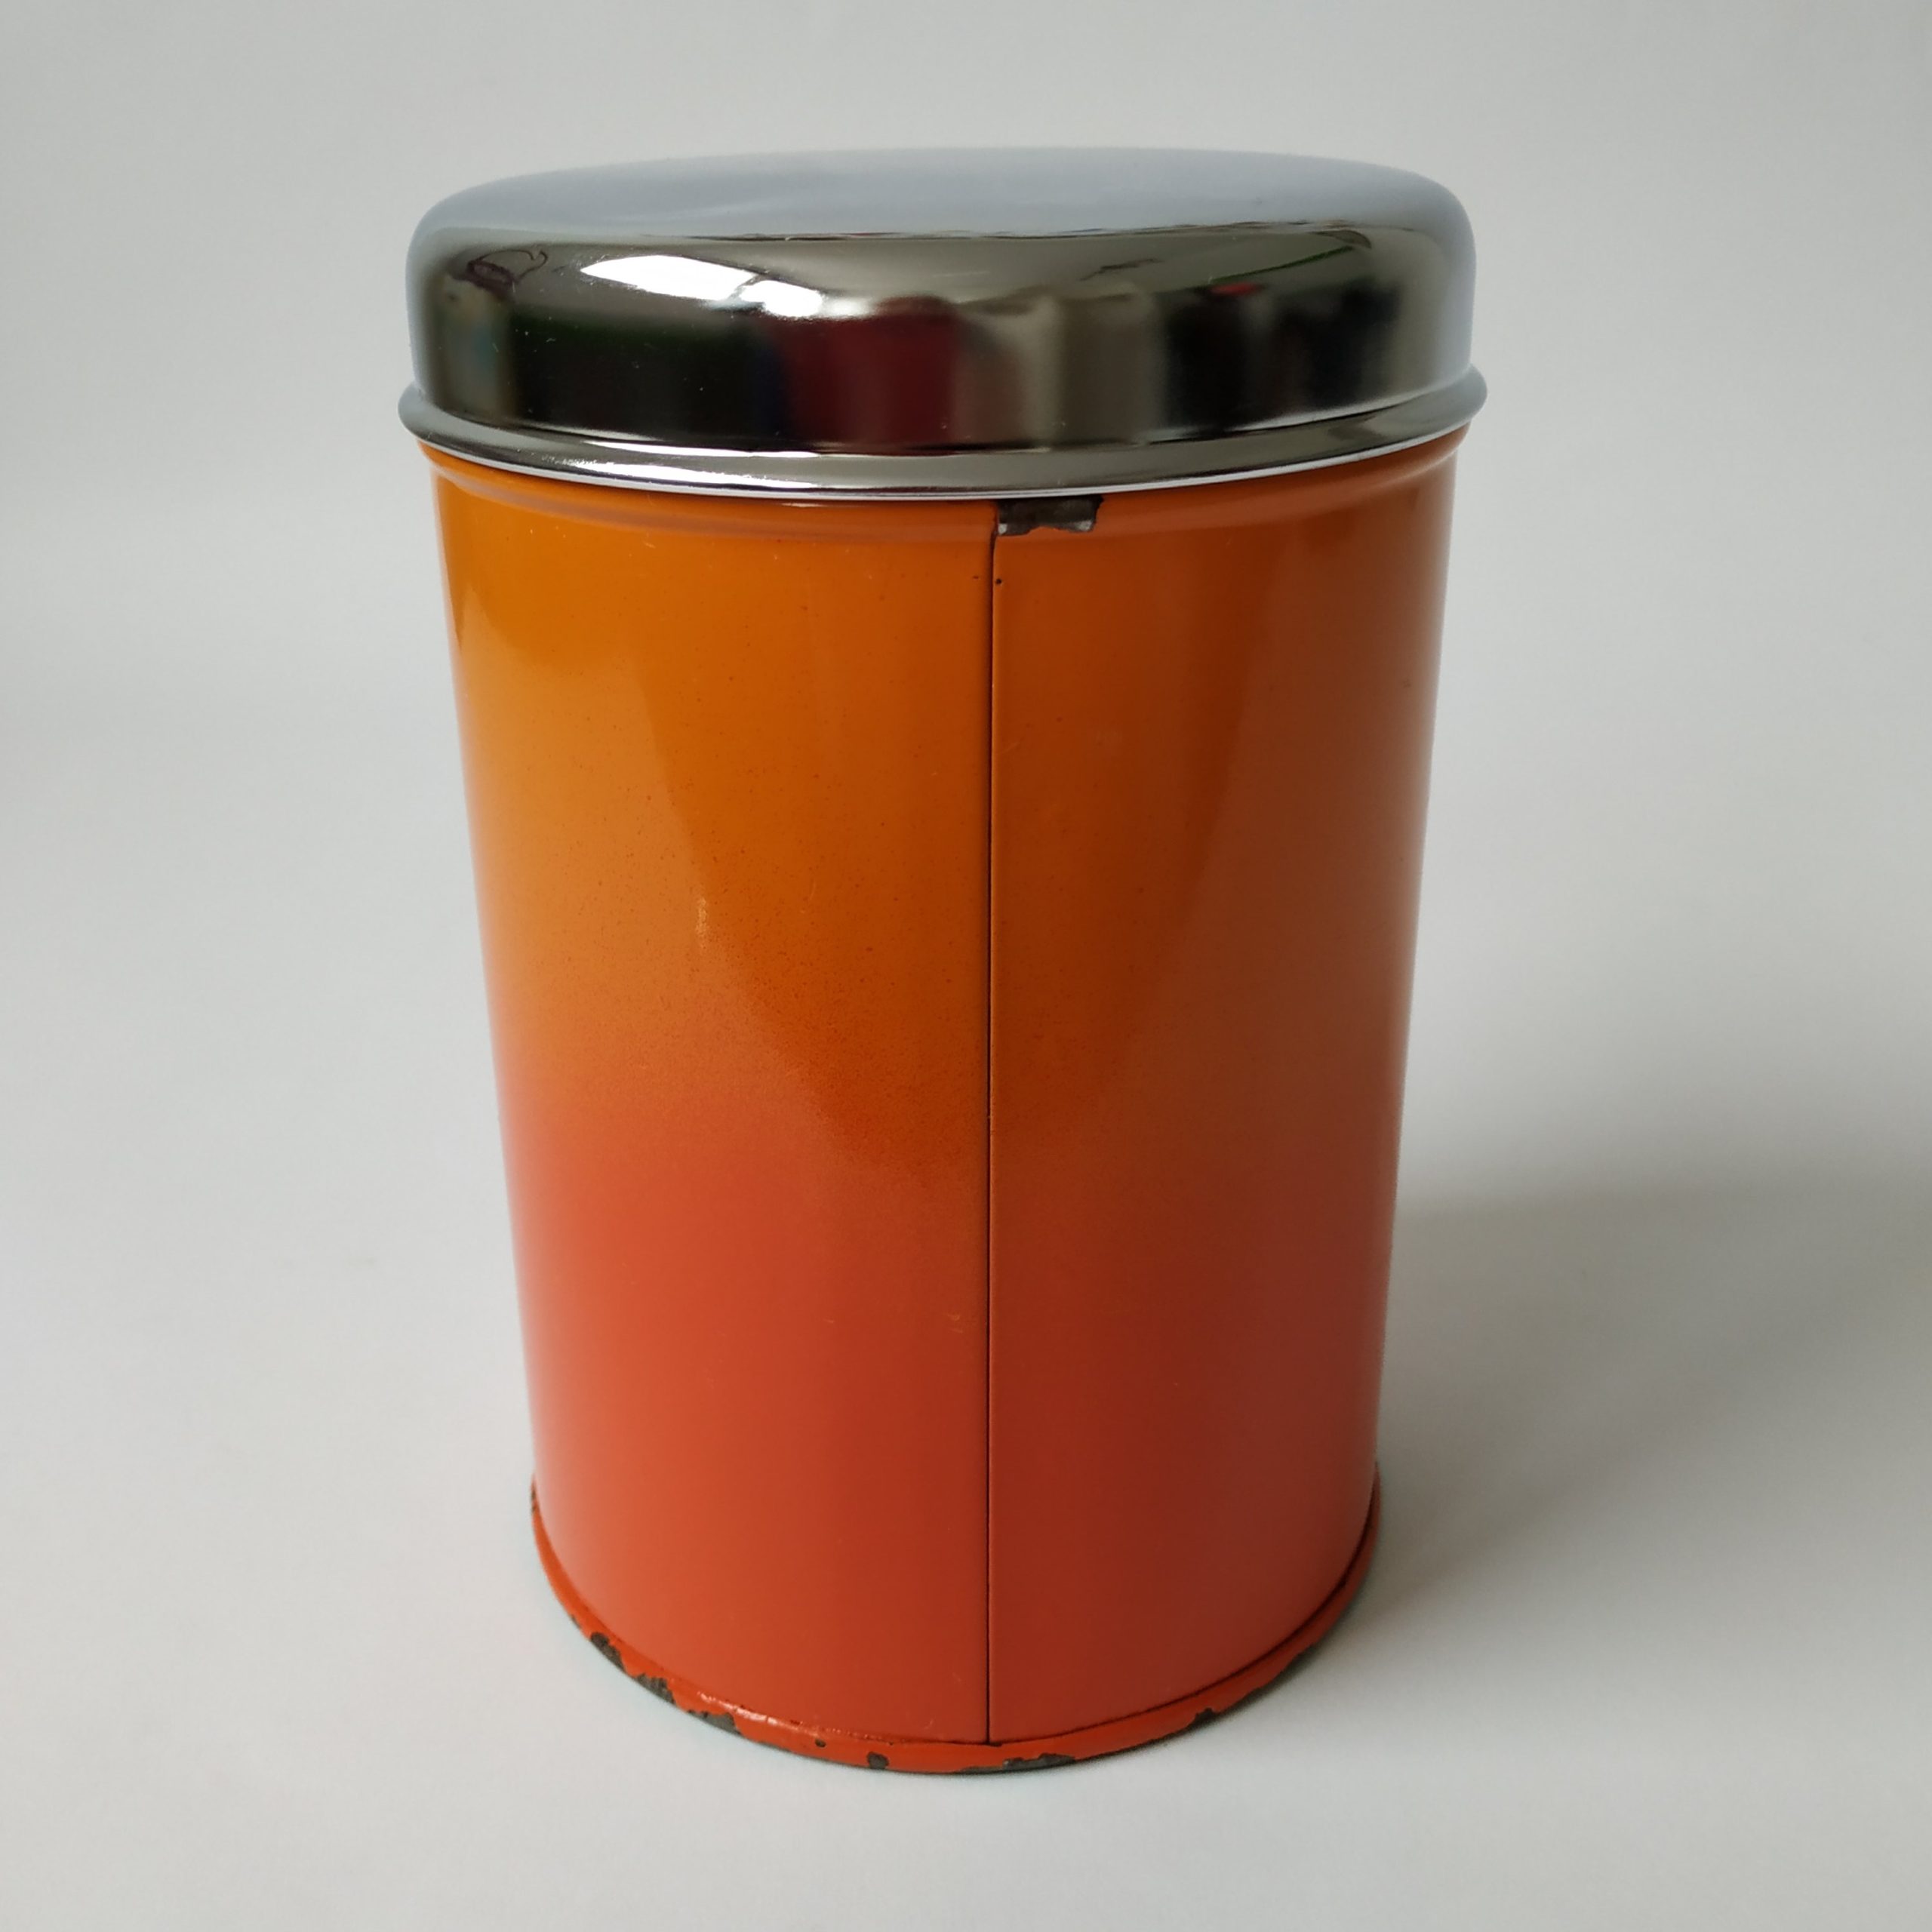 Blik Koffie met chromen deksel in de kleur oranje – hoogte 16,5 cm – diameter 11 cm (2)